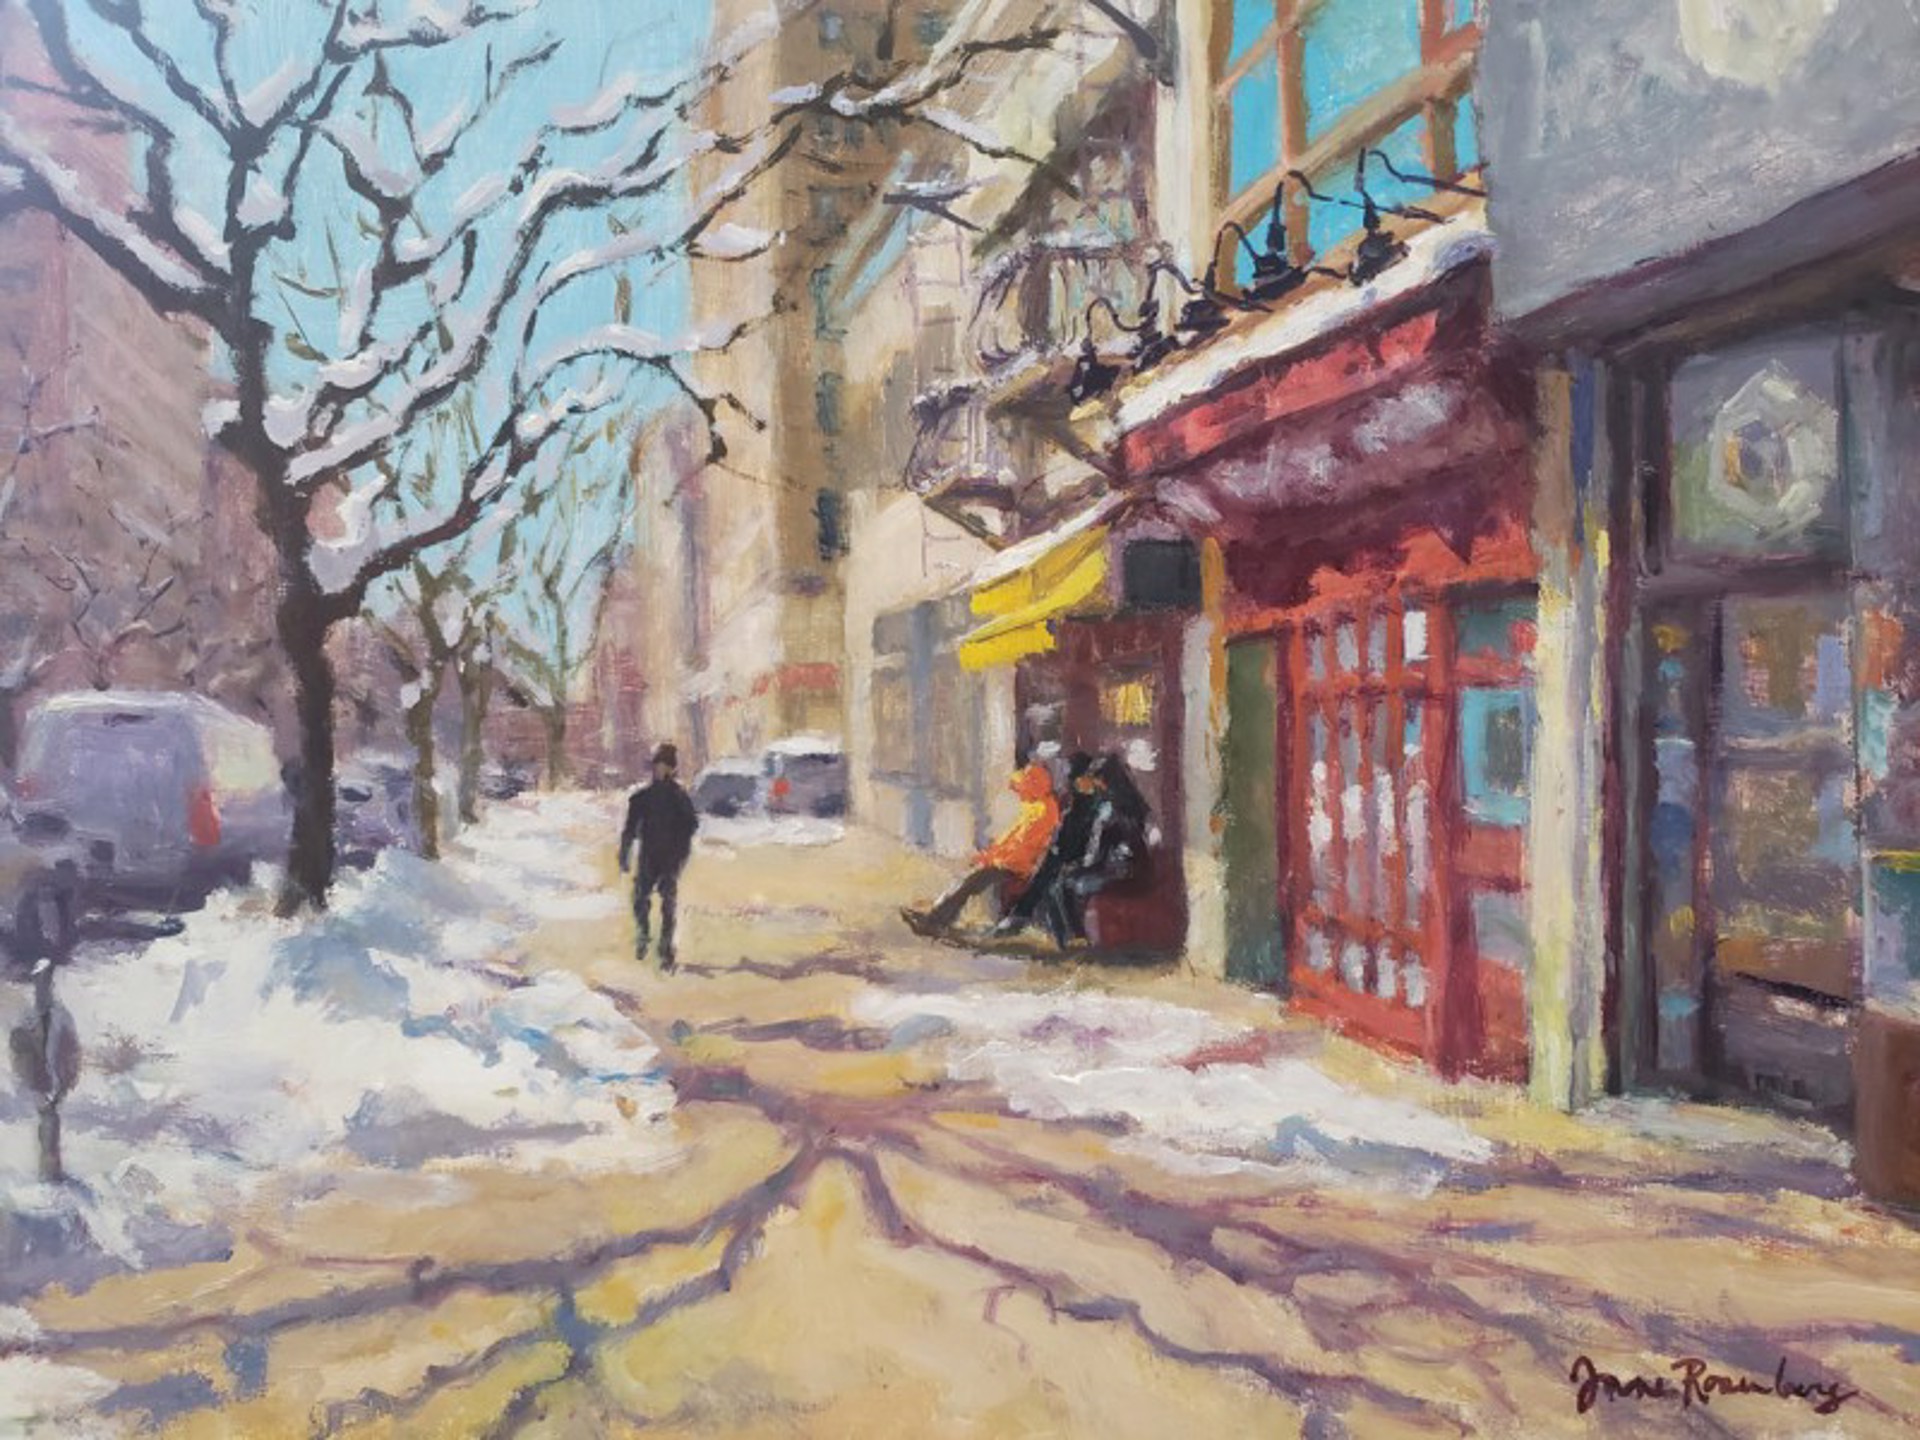 Melting Snow, Broadway and 111th Street by Jane Rosenberg